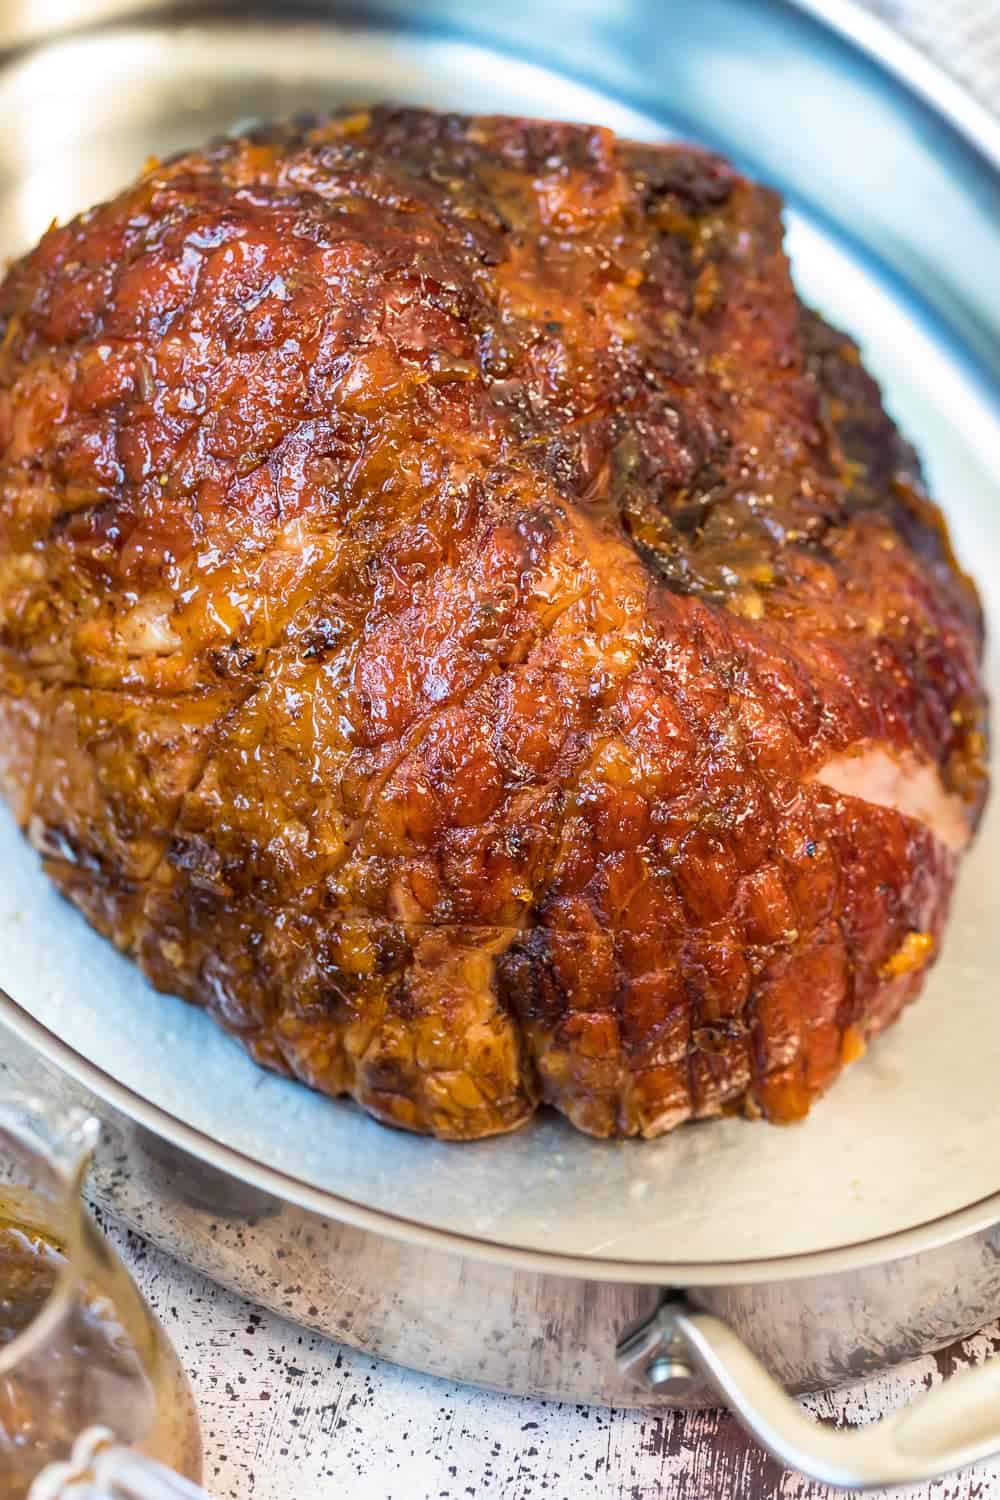 The glazed ham in a roasting dish